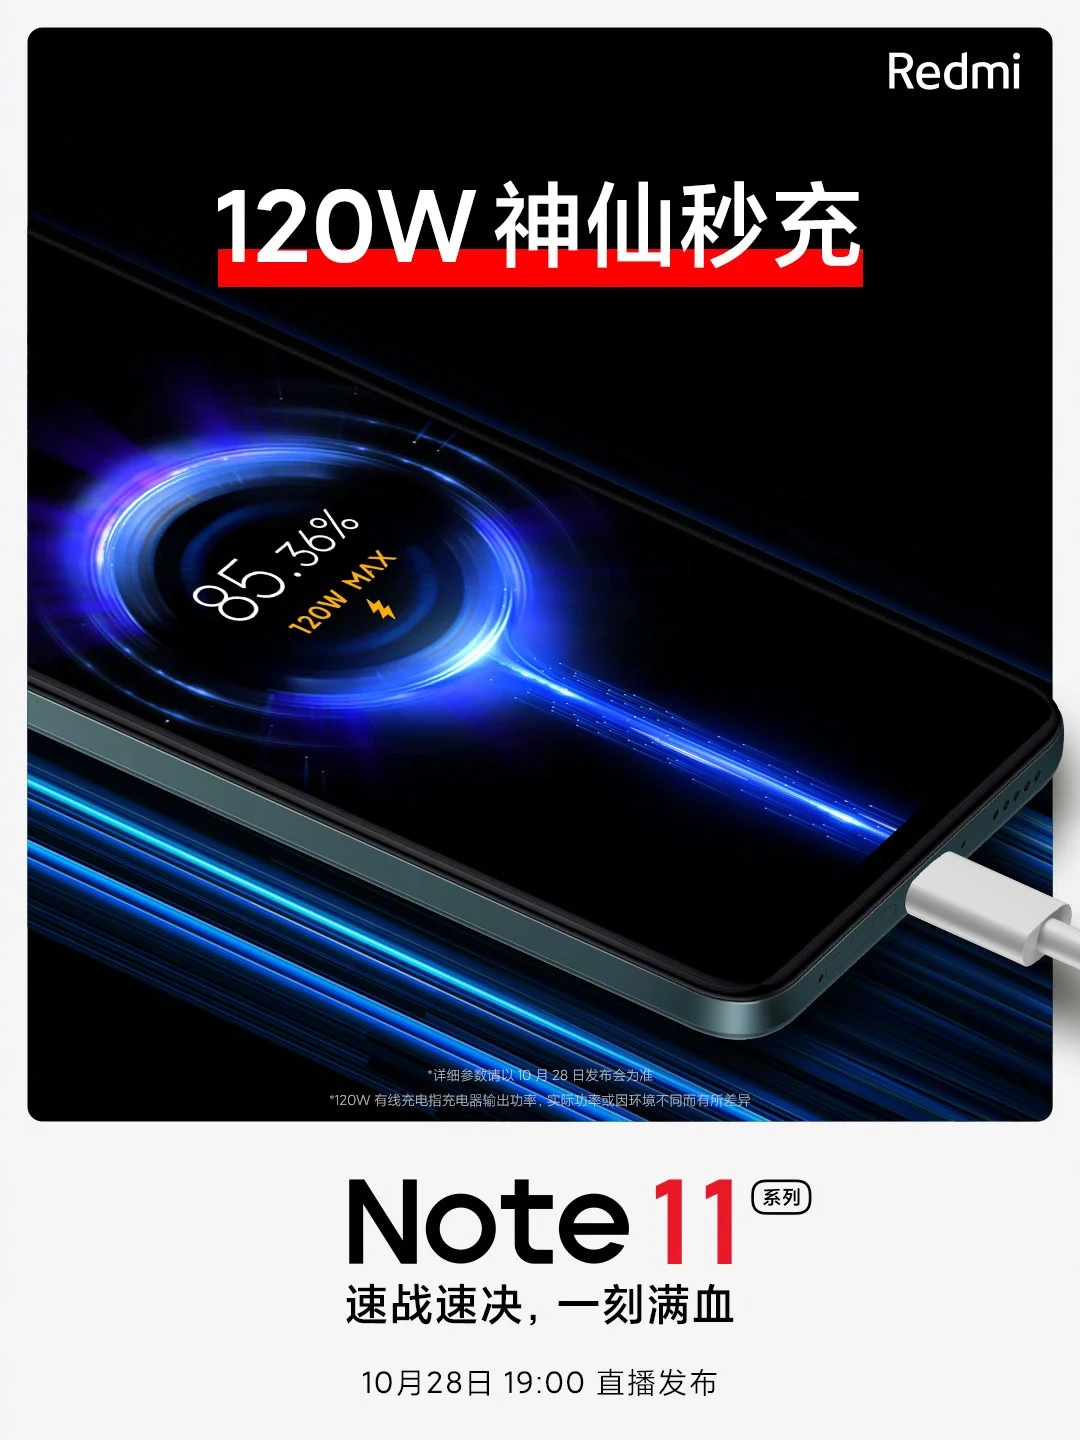 Redmi-Note-11-series-120W-fast-charging